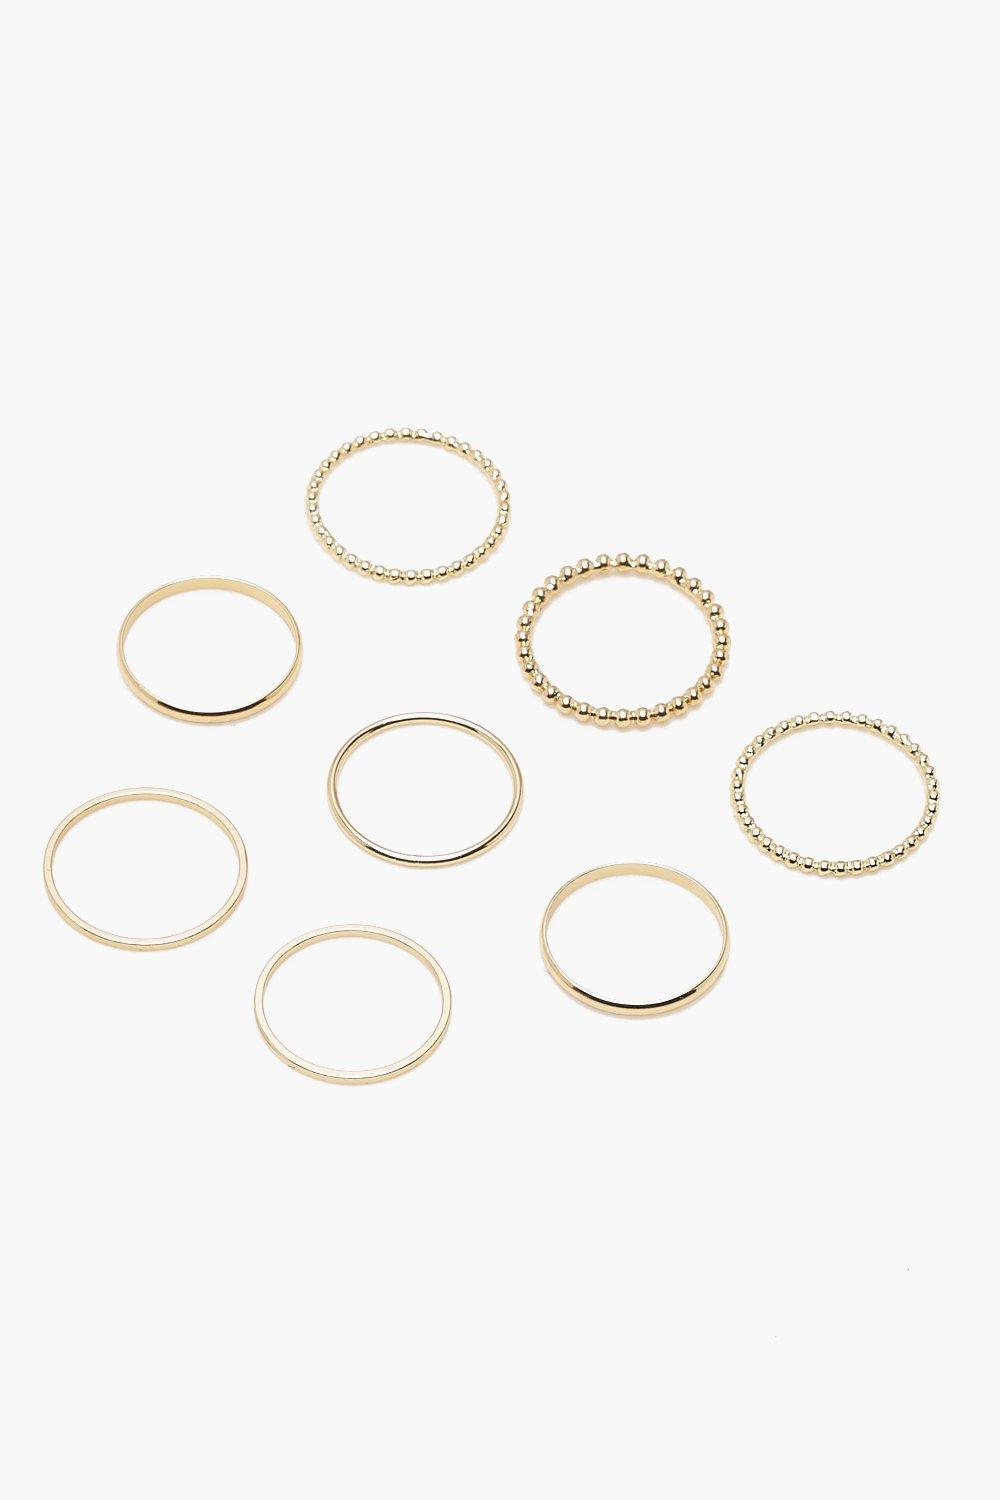 Plus Gold 8 Pack Basic Ring Set